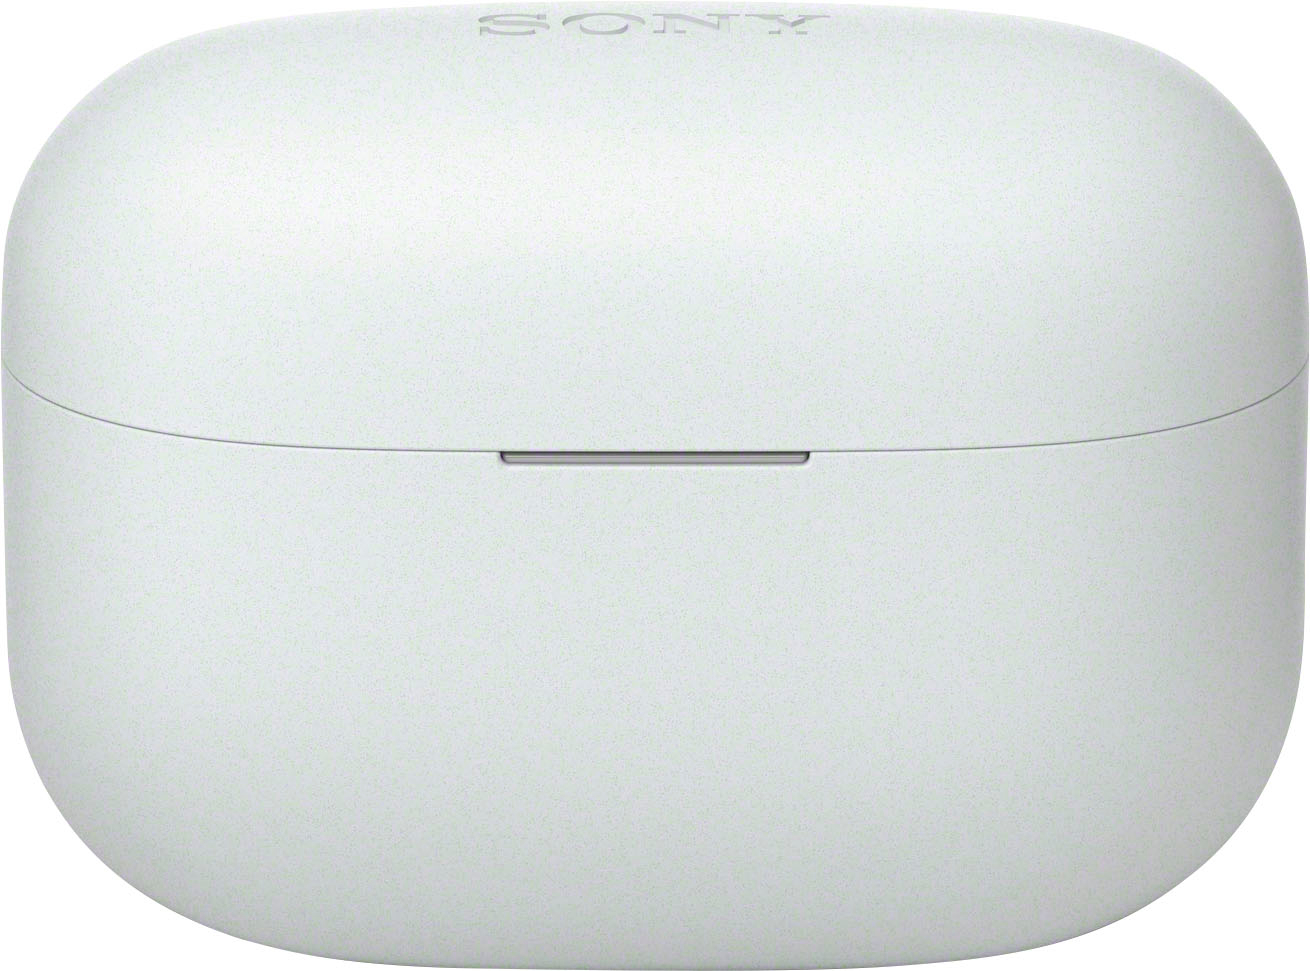 Sony LinkBuds S True Wireless Noise Canceling Earbuds White 